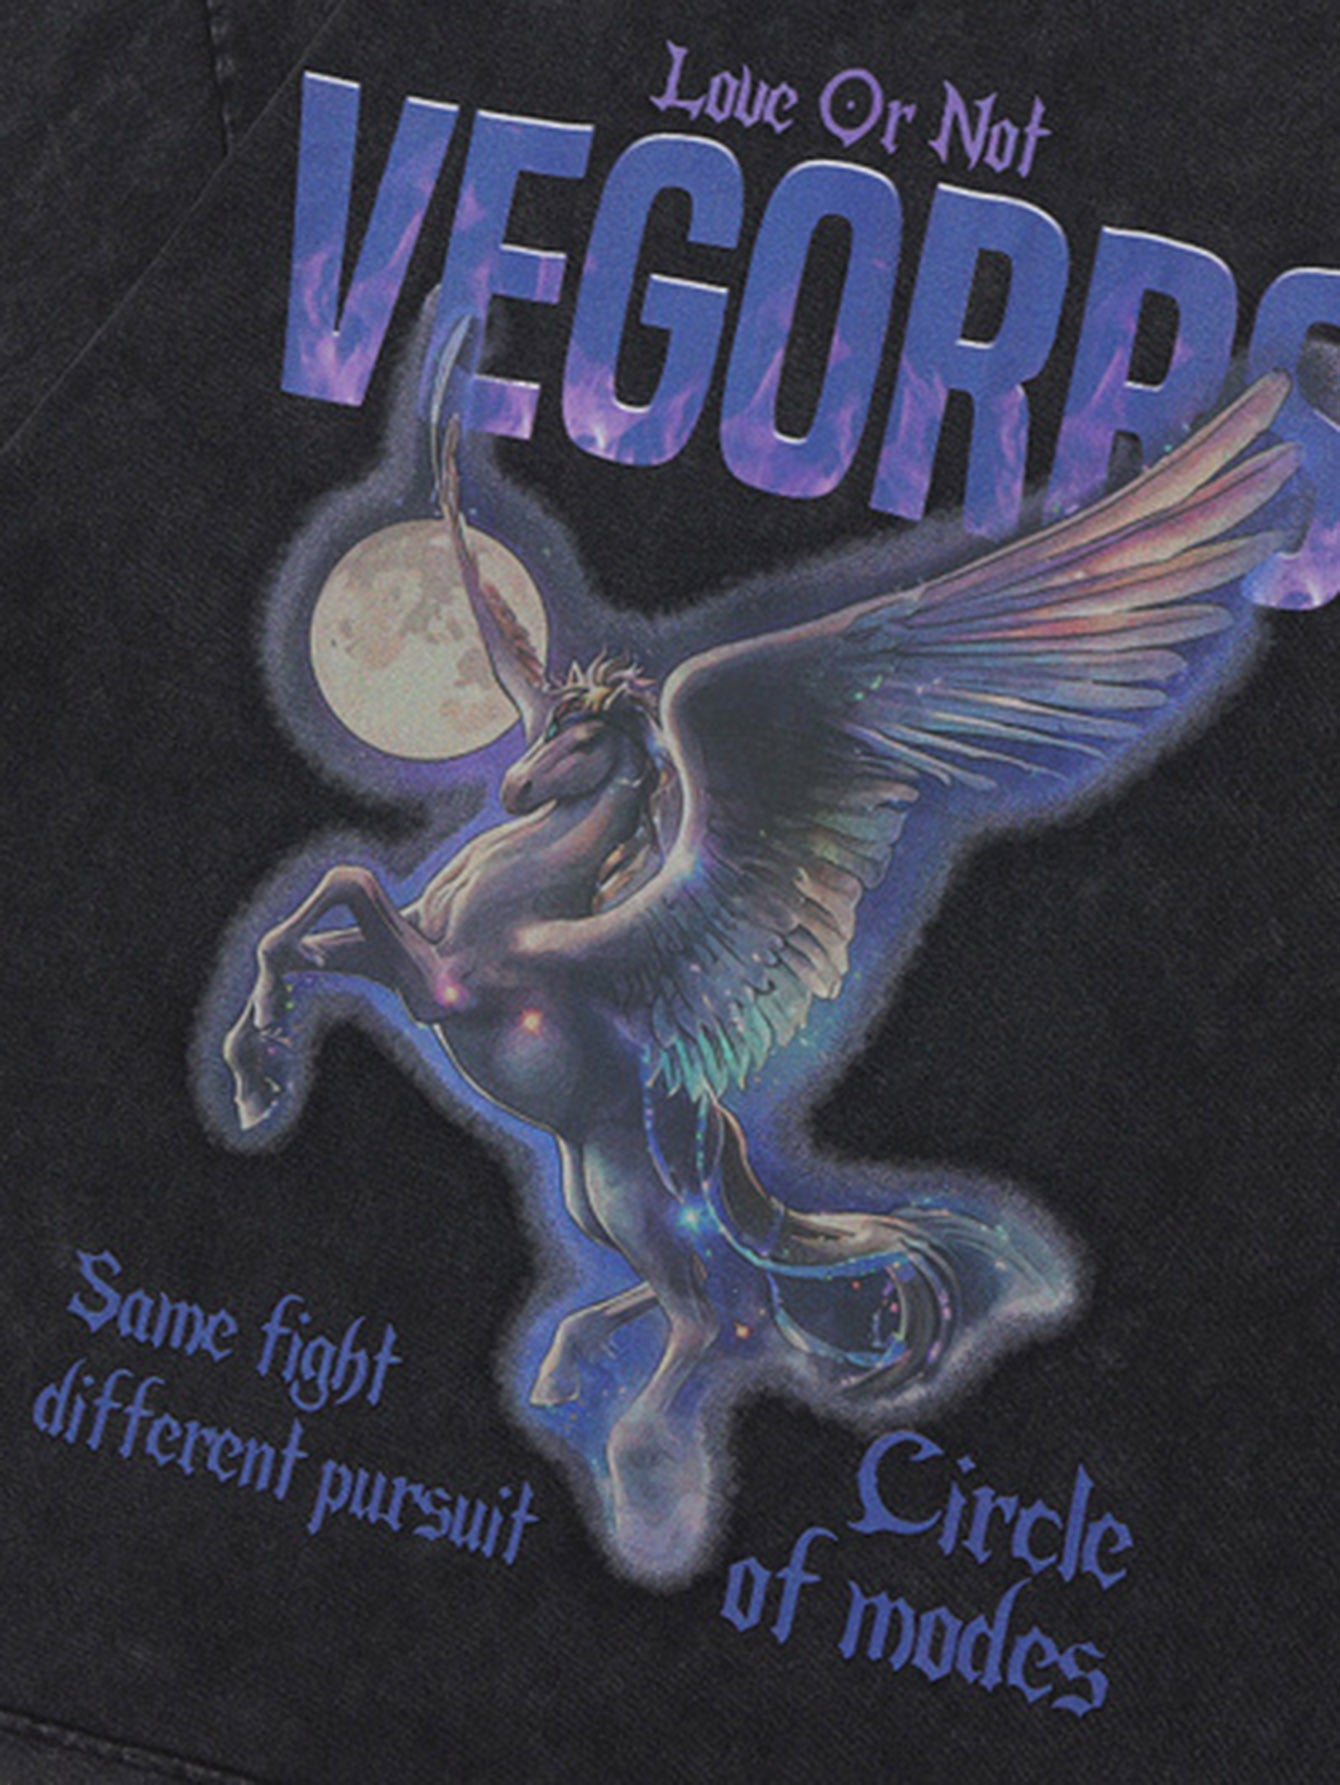 The Supermade Winged Unicorn T-shirt